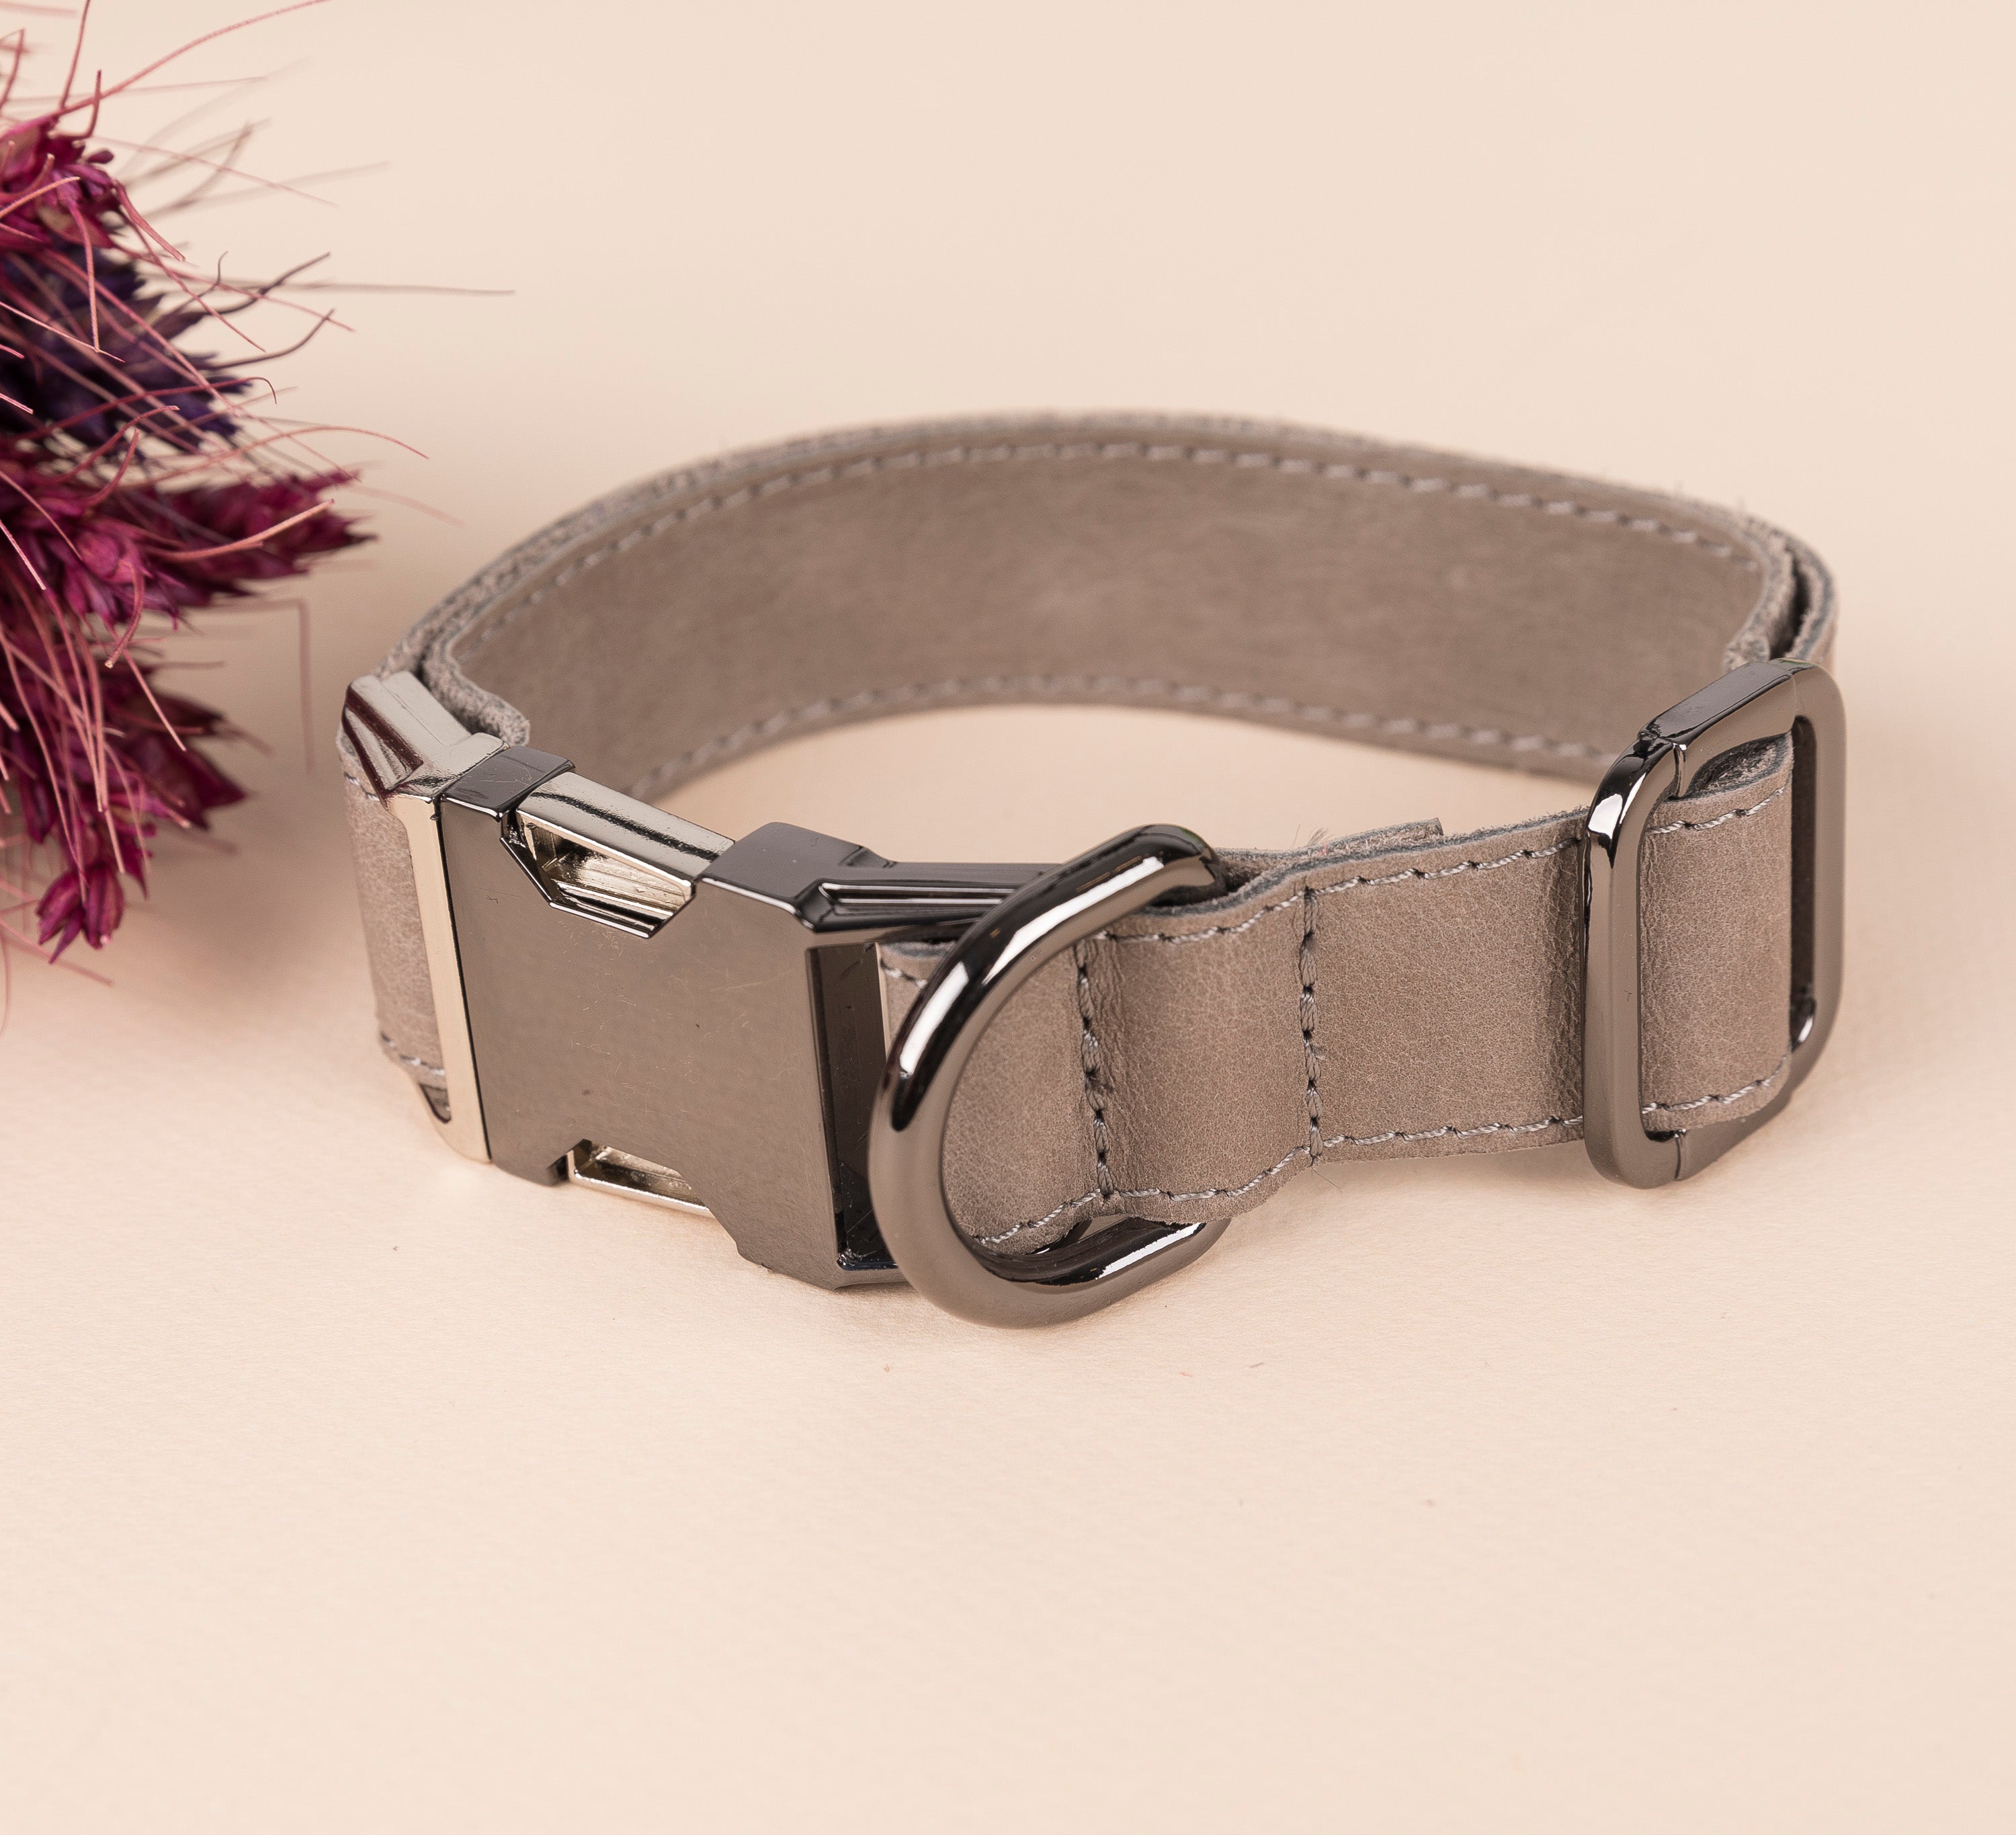 Genuine Leather Adjustable Strong Dog Collar 27